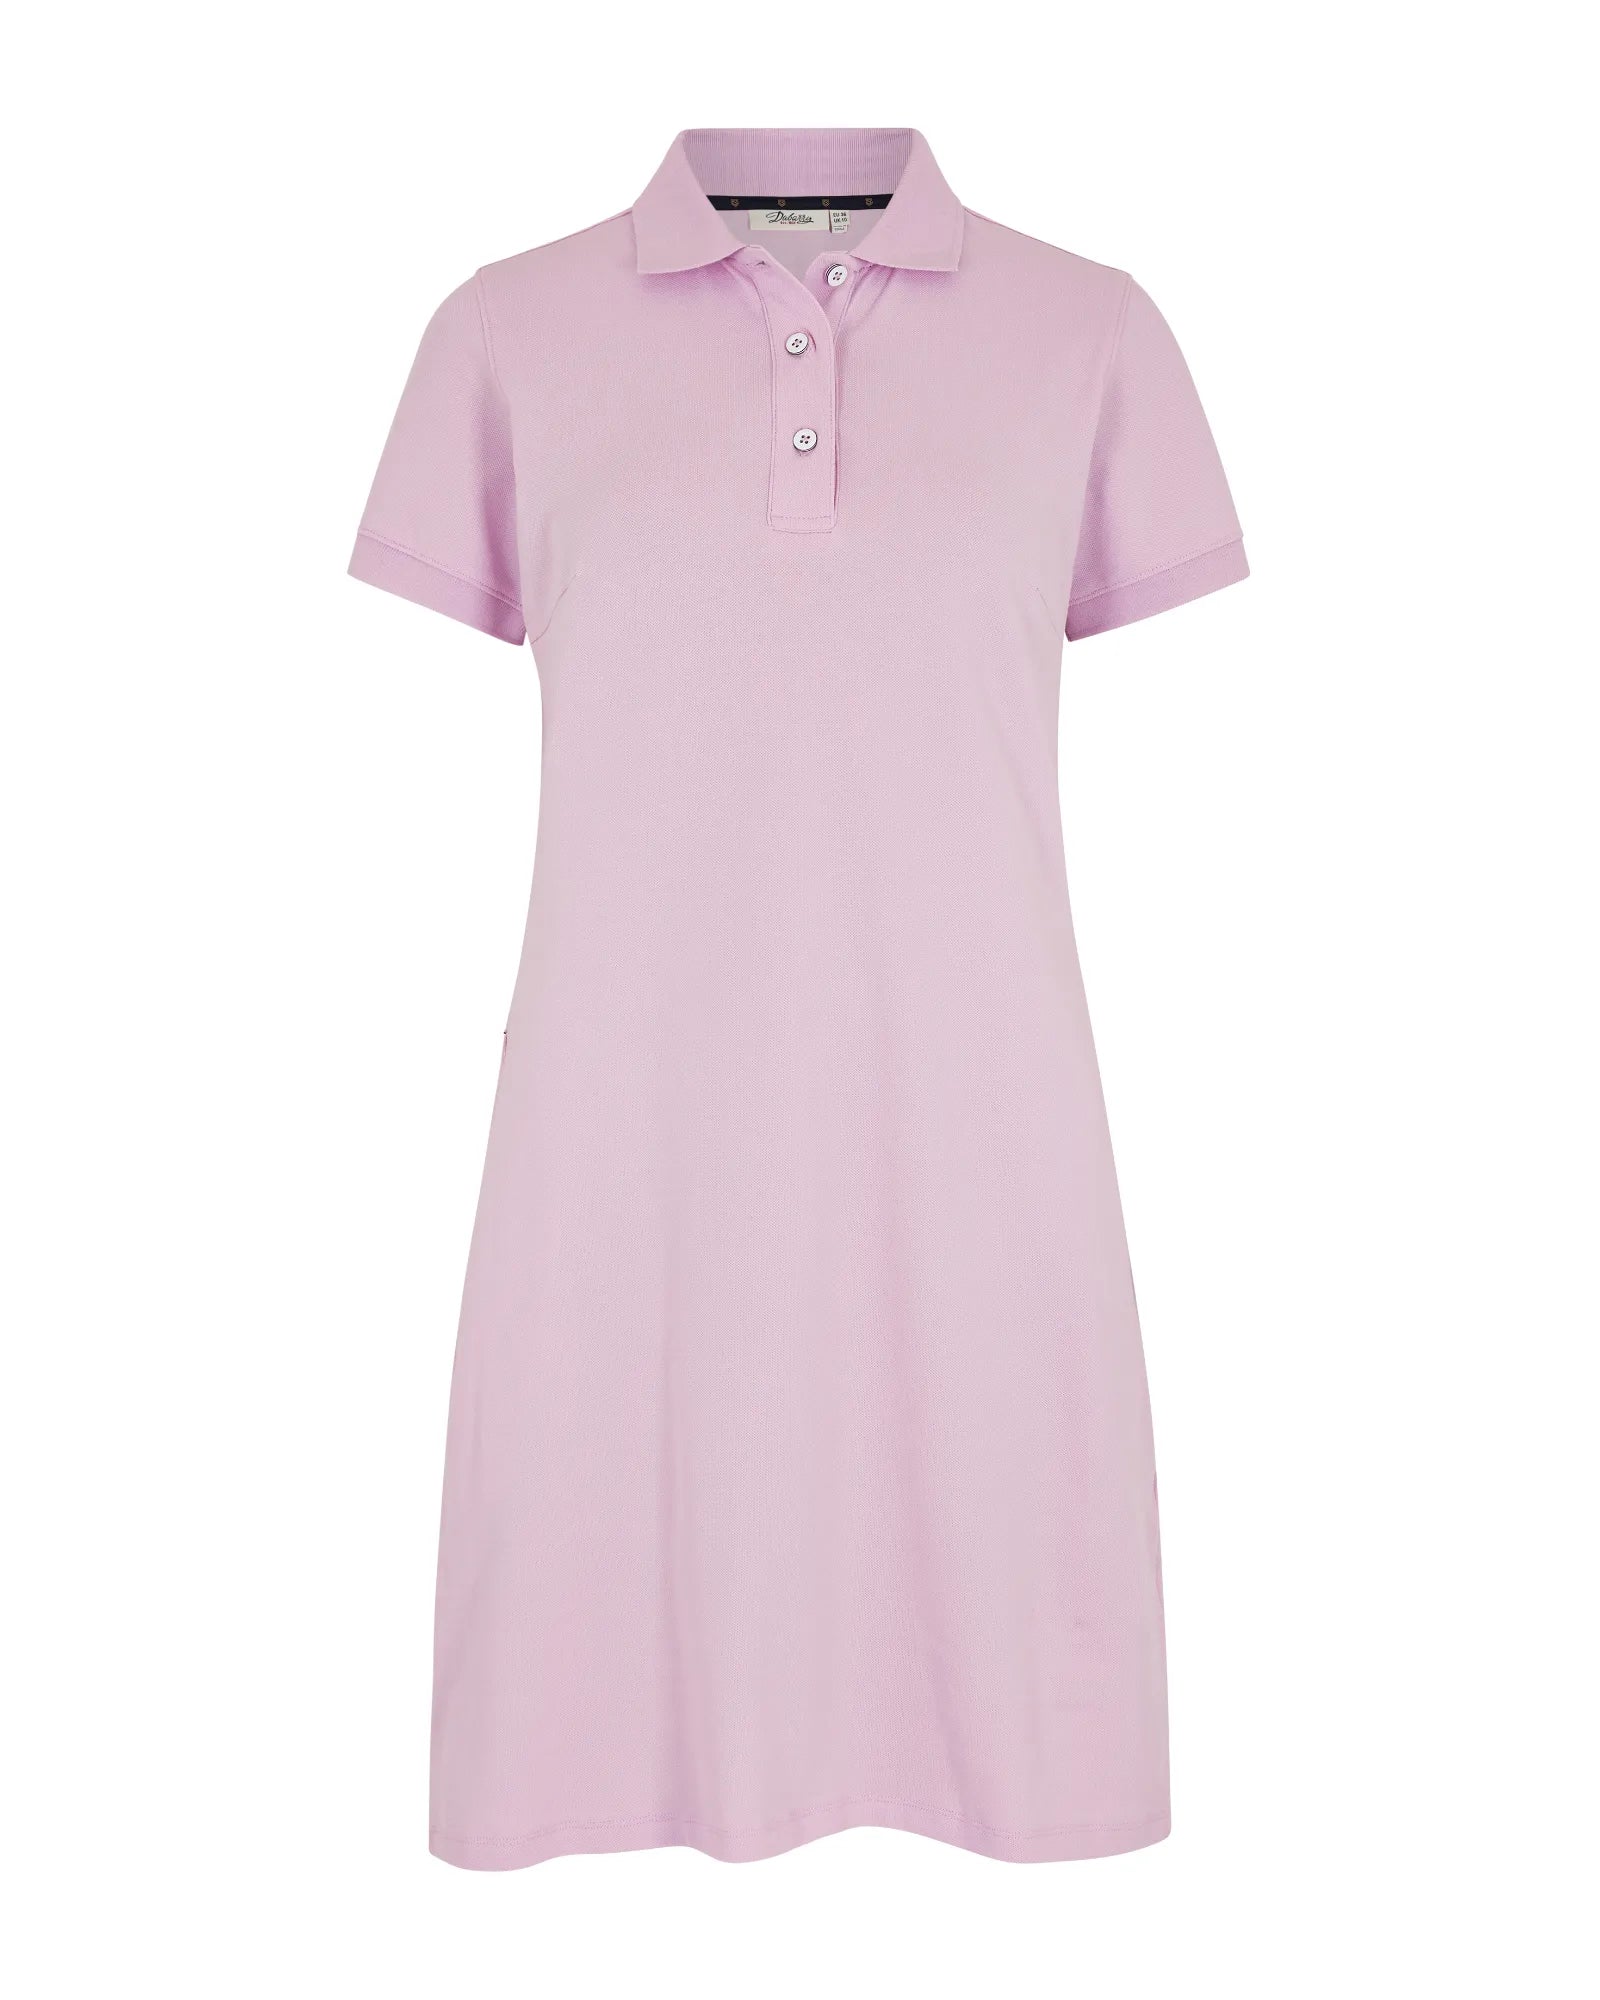 Gardiner Polo Dress - Pink